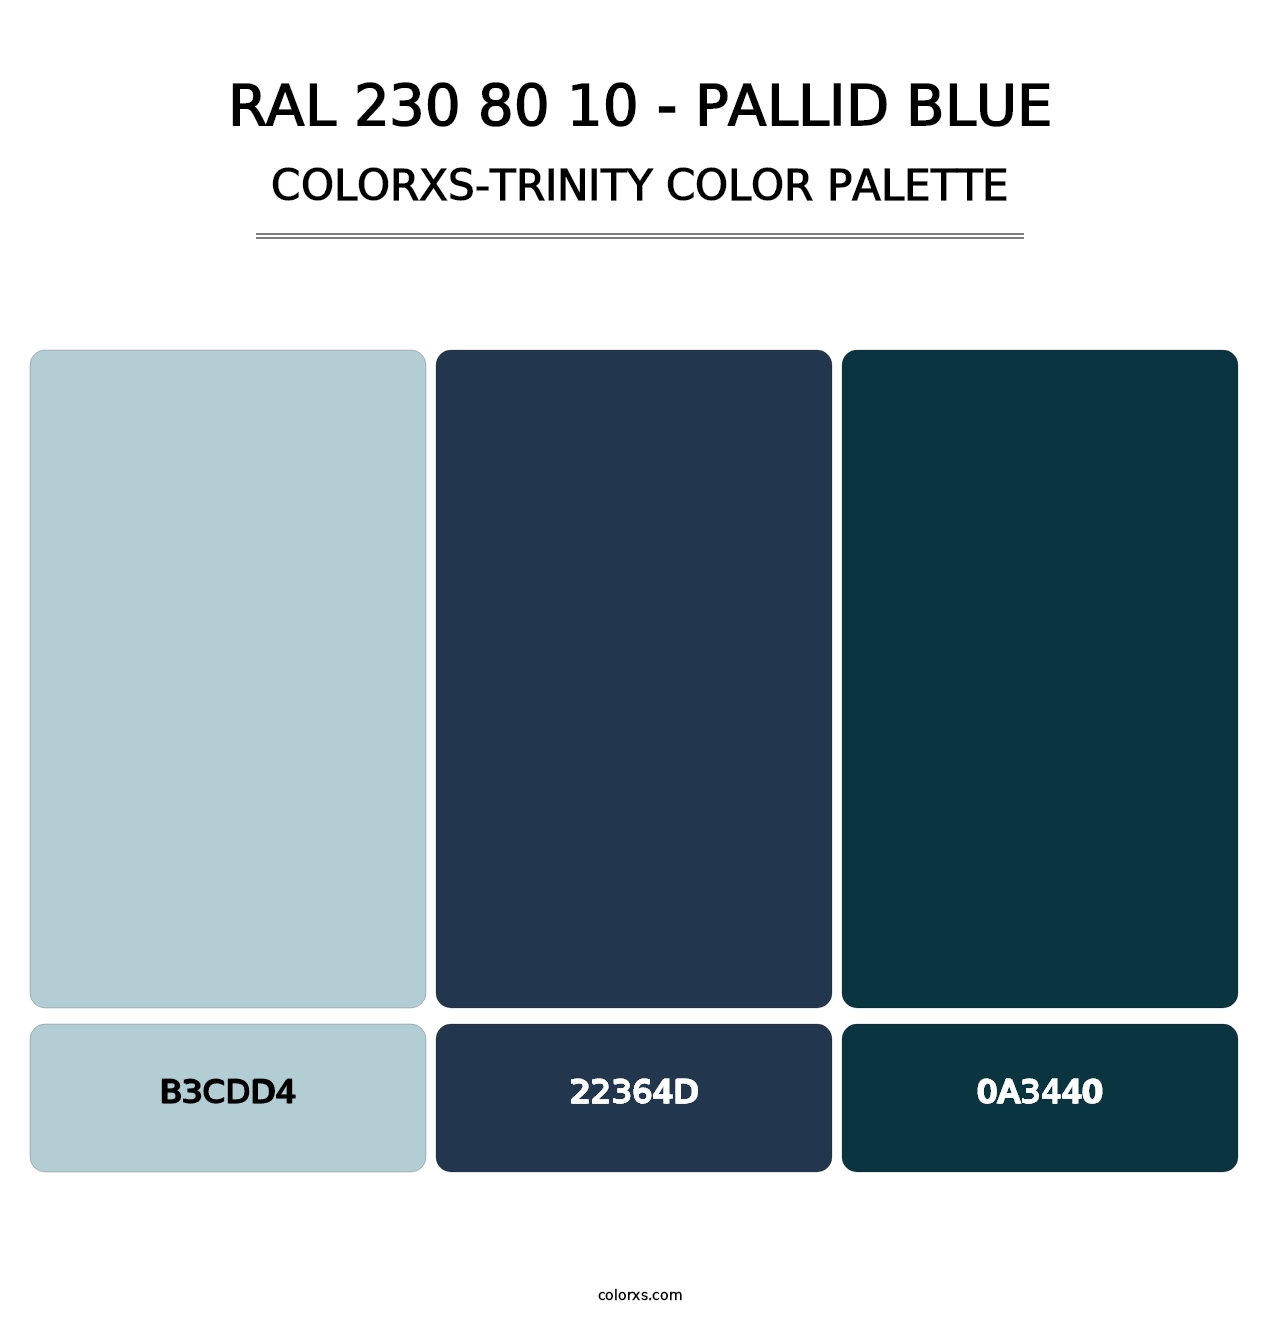 RAL 230 80 10 - Pallid Blue - Colorxs Trinity Palette